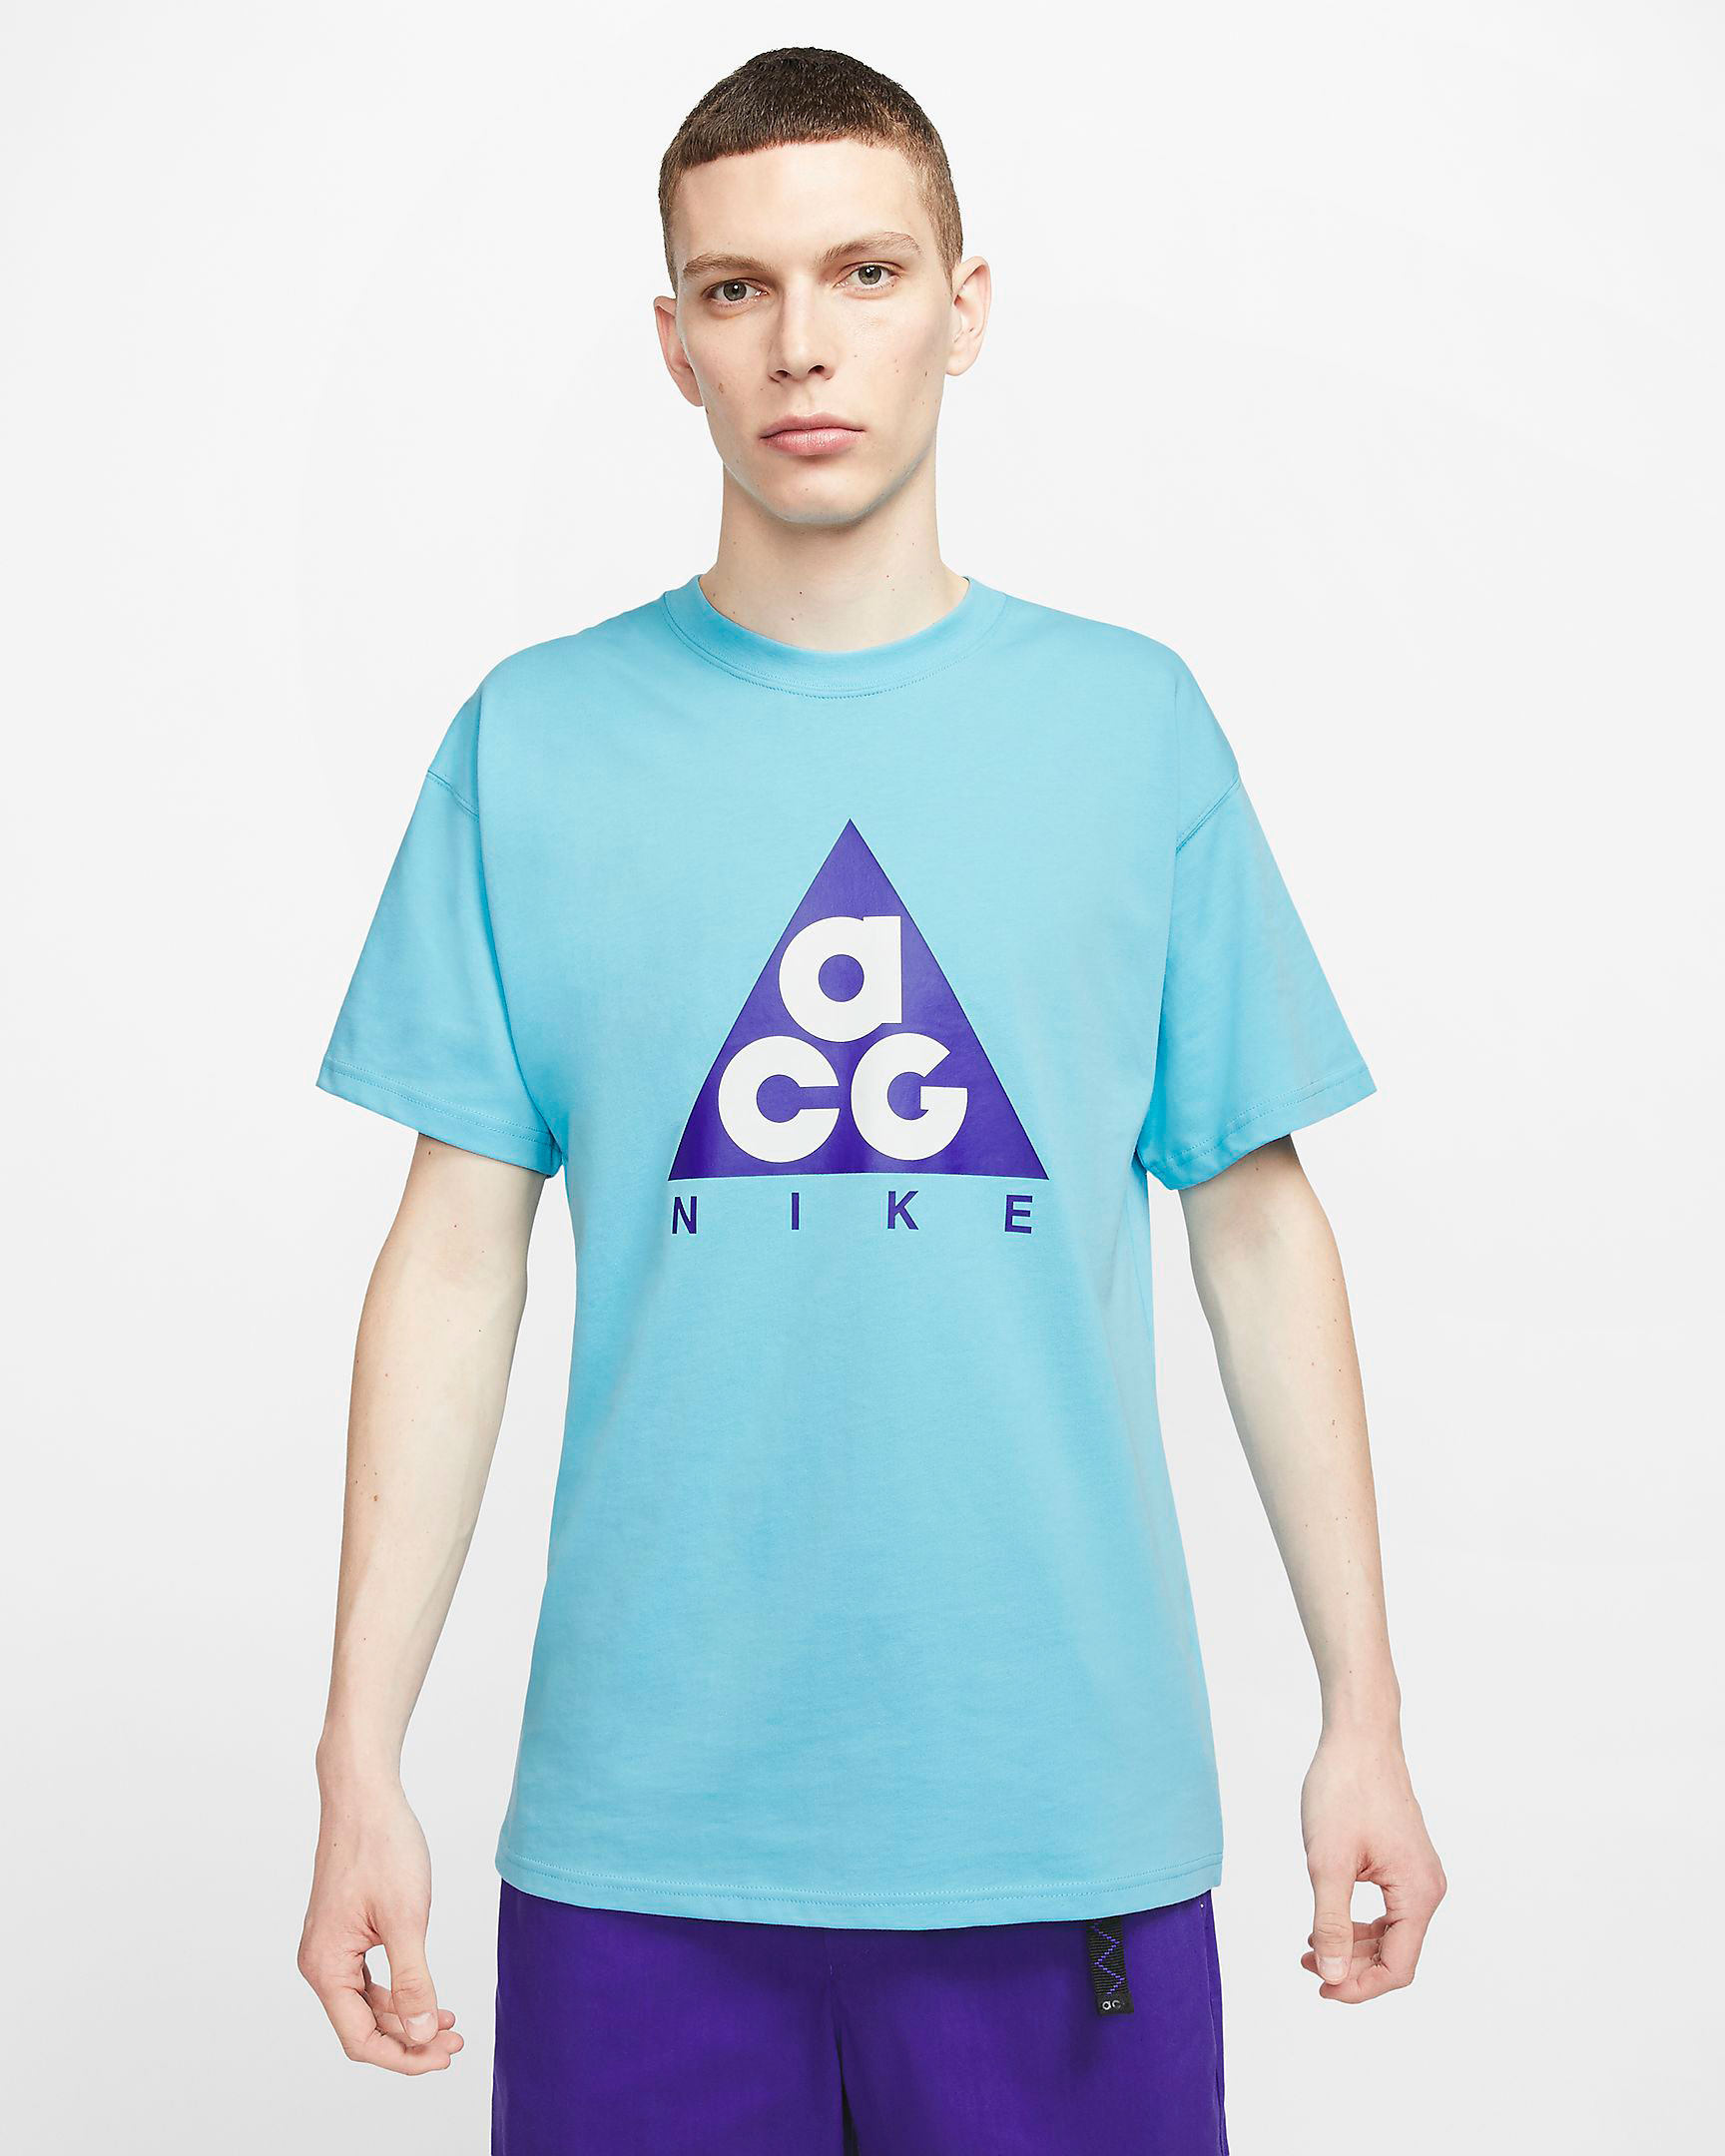 nike-acg-logo-t-shirt-blue-purple